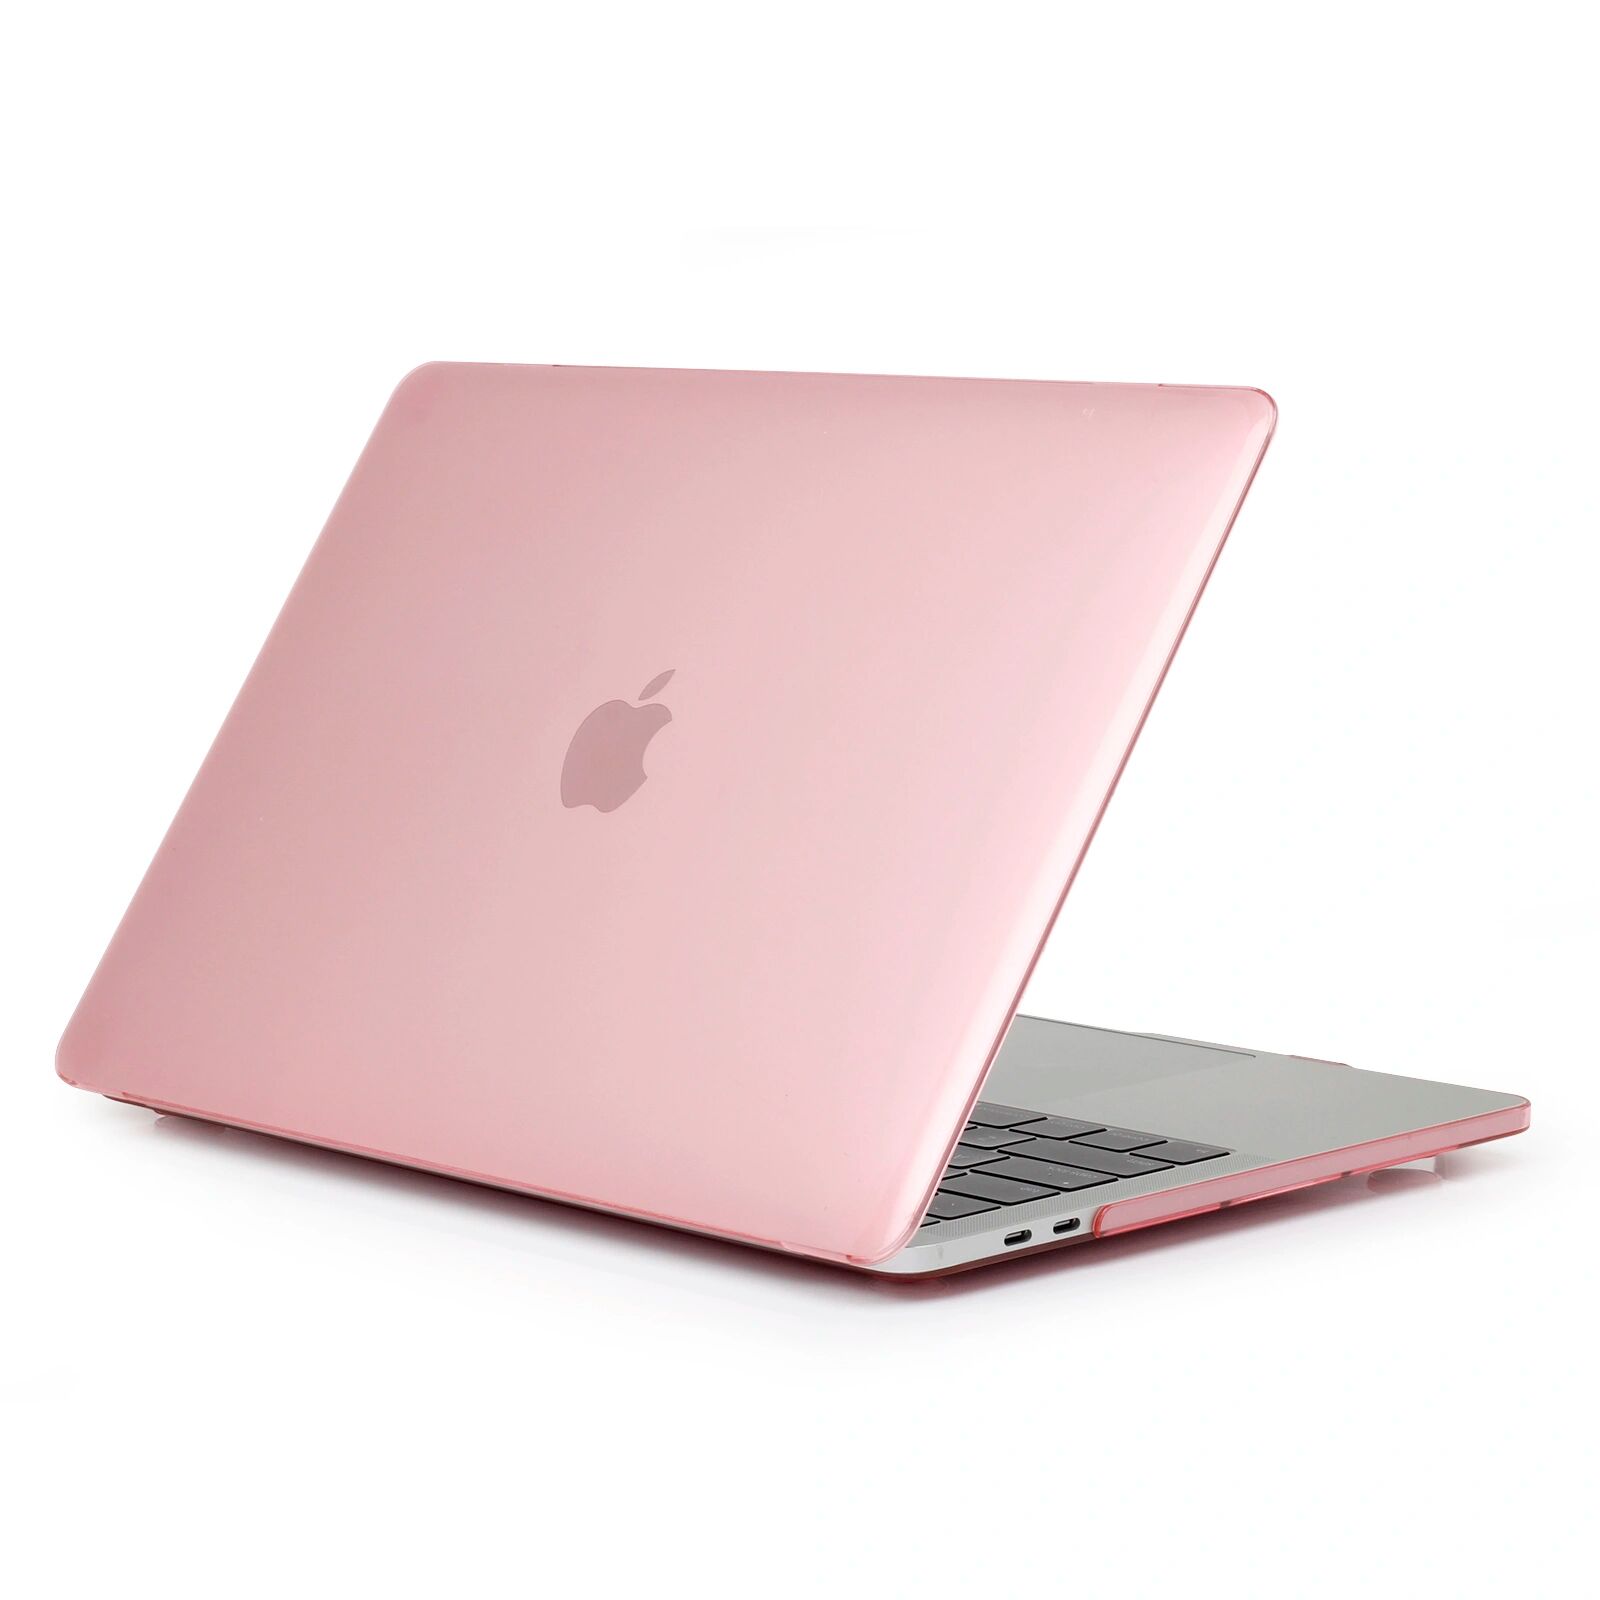 iPouzdro.cz Ochranný kryt na MacBook Pro 15 (2012-2015) - Crystal Pink